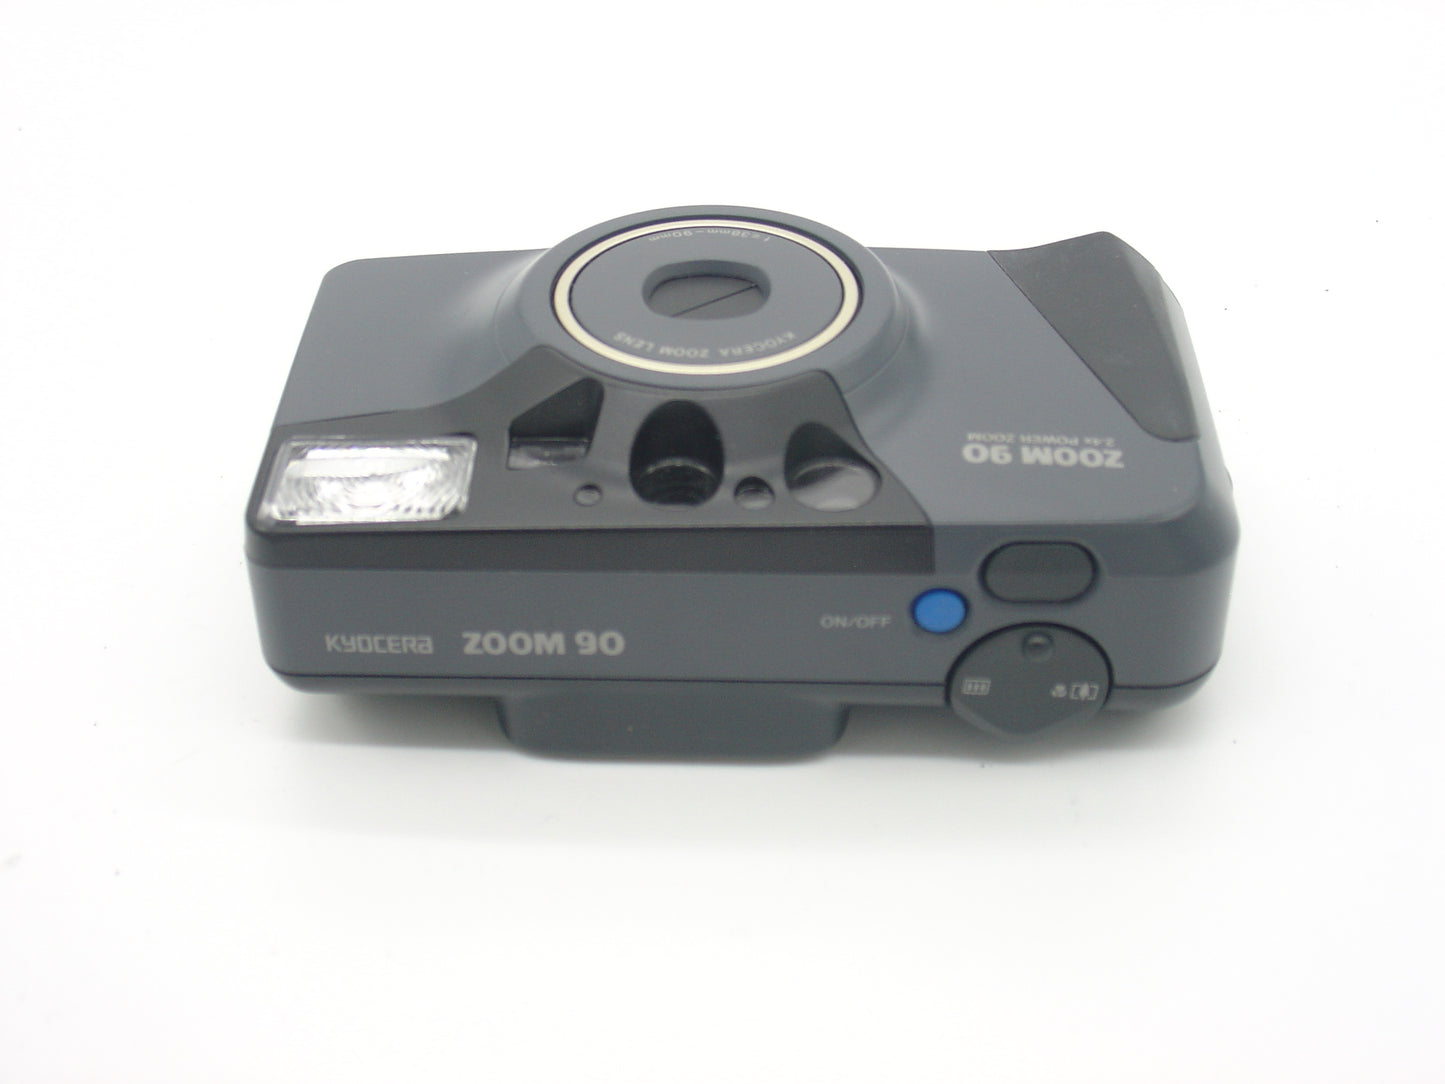 Kyocera Zoom 90 point-and-shoot film camera